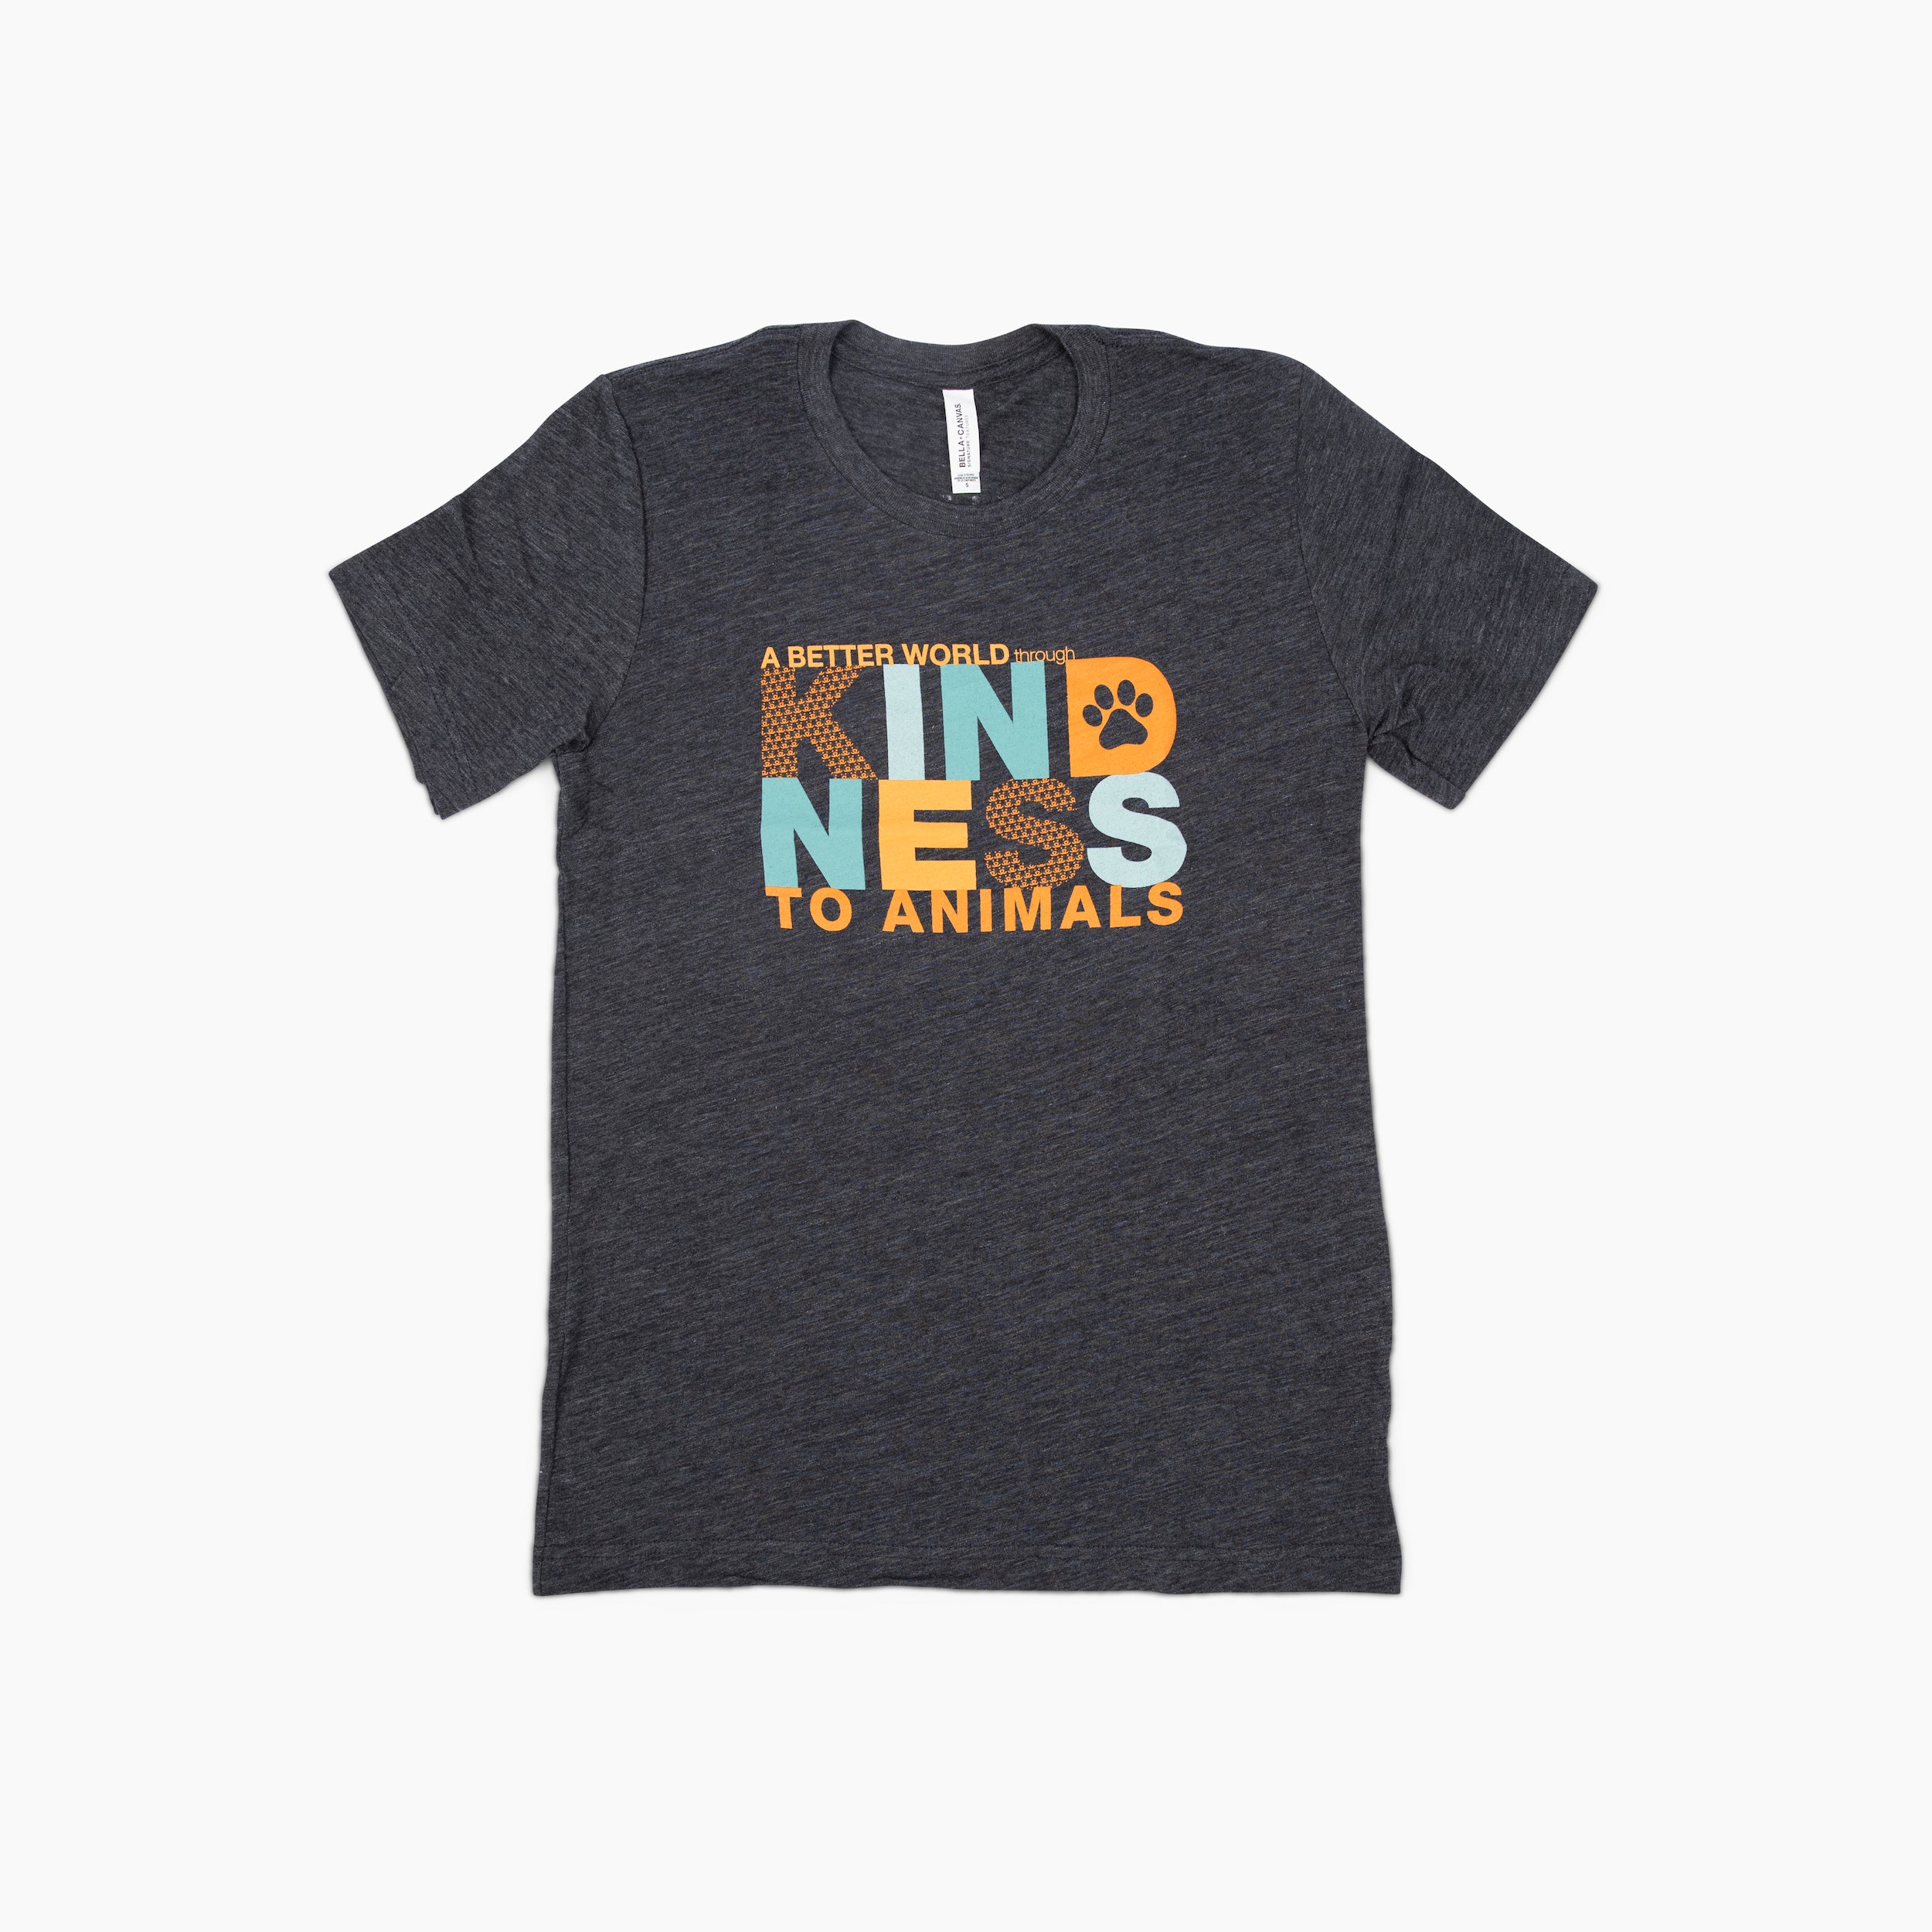 Kindness, Vision T Shirt, Adult